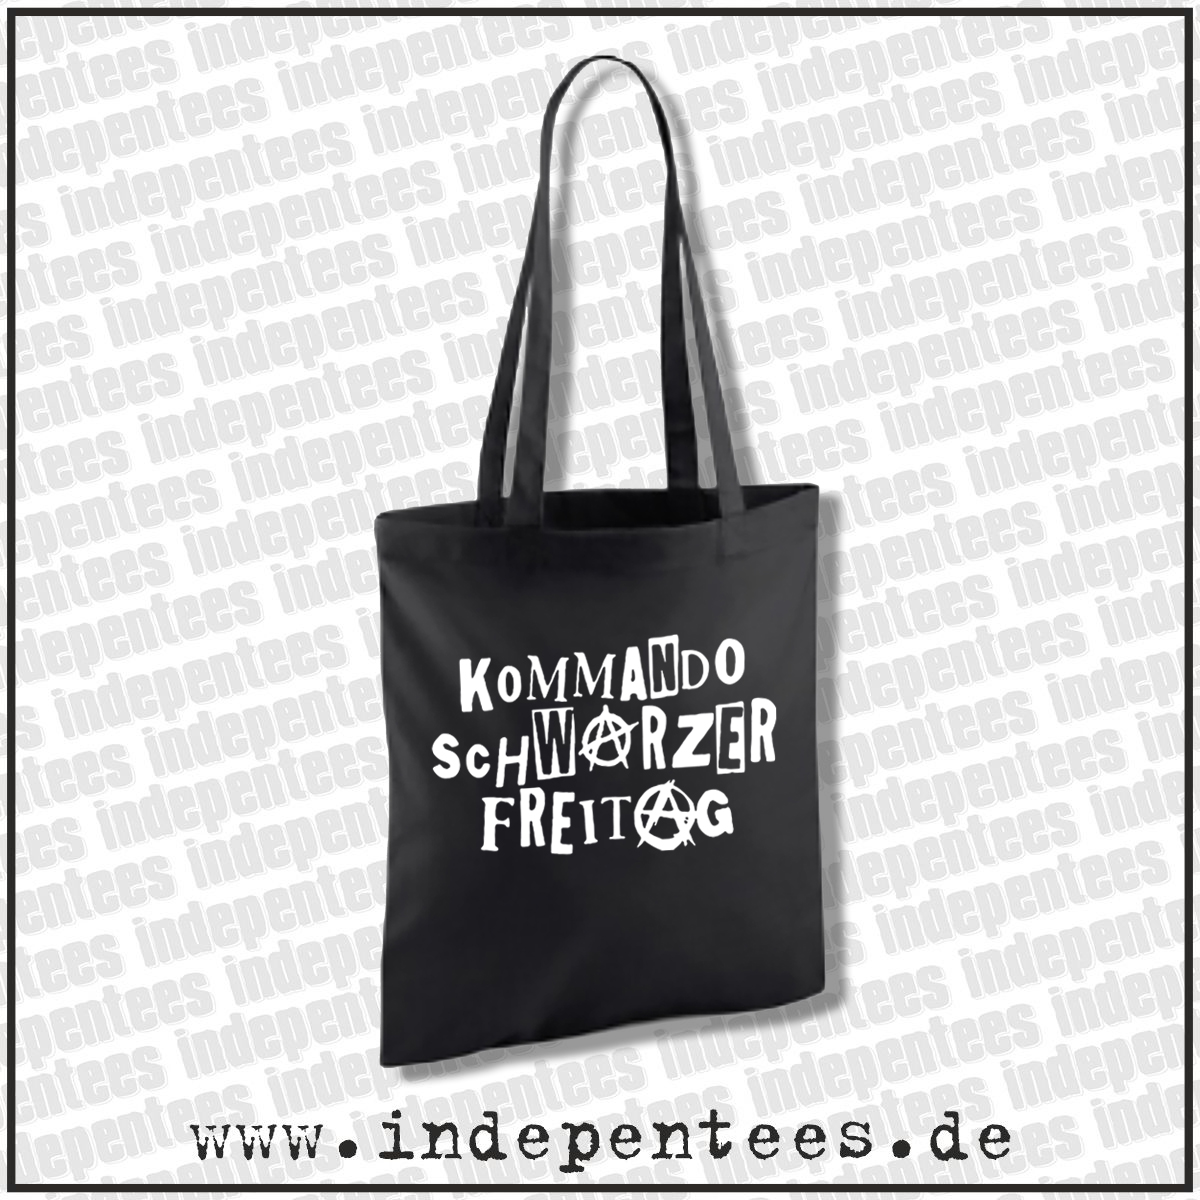 Kommando Schwarzer Freitag | KSF Tote Bag